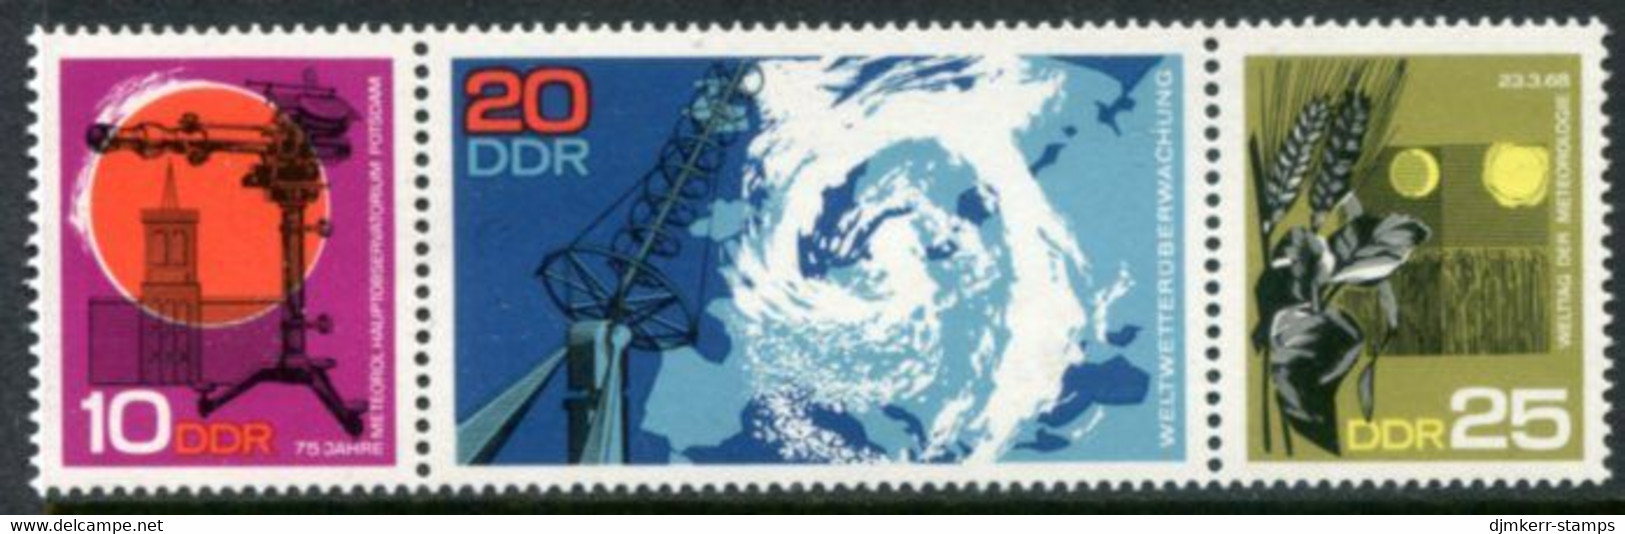 DDR / E. GERMANY 1968 Meteorological Observatory Strip MNH / **.  Michel 1343-45 - Ongebruikt